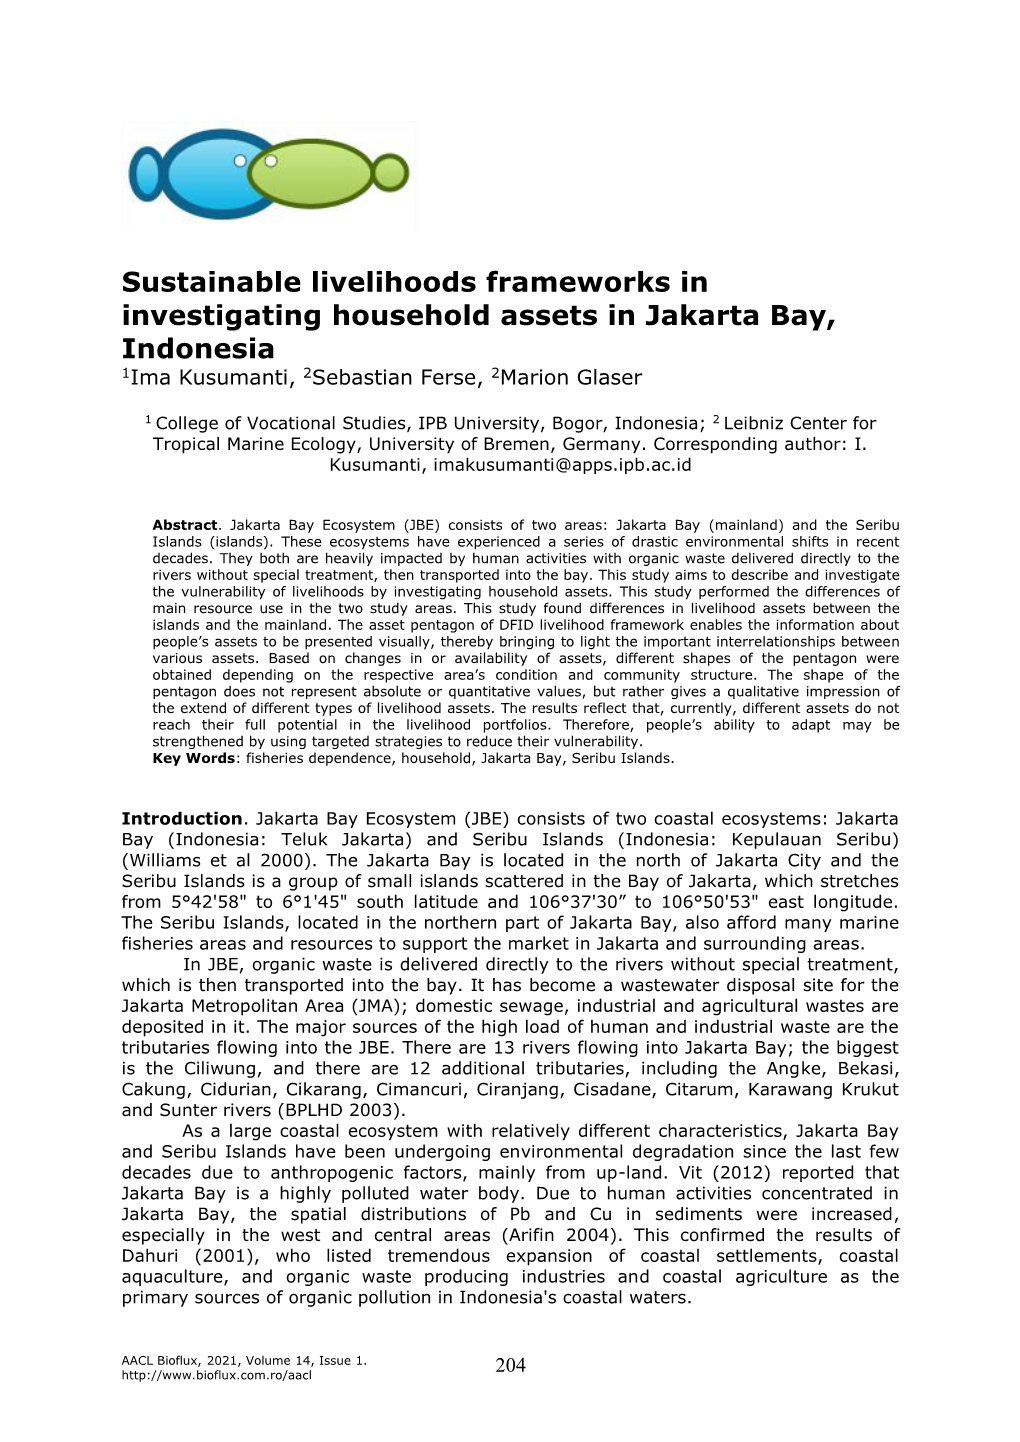 Sustainable Livelihoods Frameworks in Investigating Household Assets in Jakarta Bay, Indonesia 1Ima Kusumanti, 2Sebastian Ferse, 2Marion Glaser